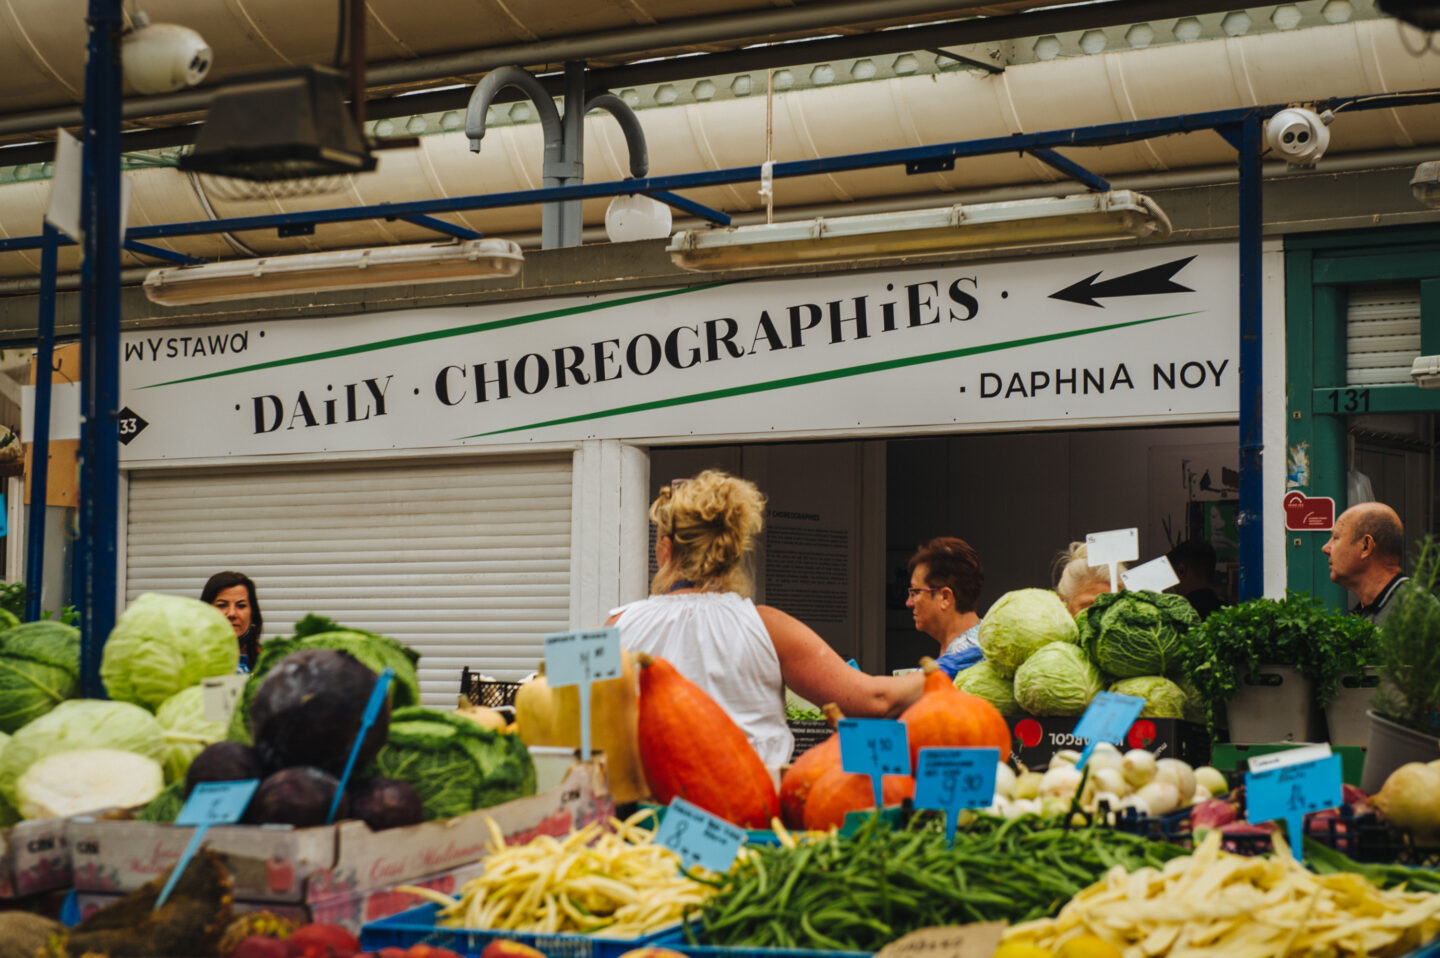 Daily choreographies, Daphna Noy, Gdynia, August 2021 - phot. G. Karkoszka